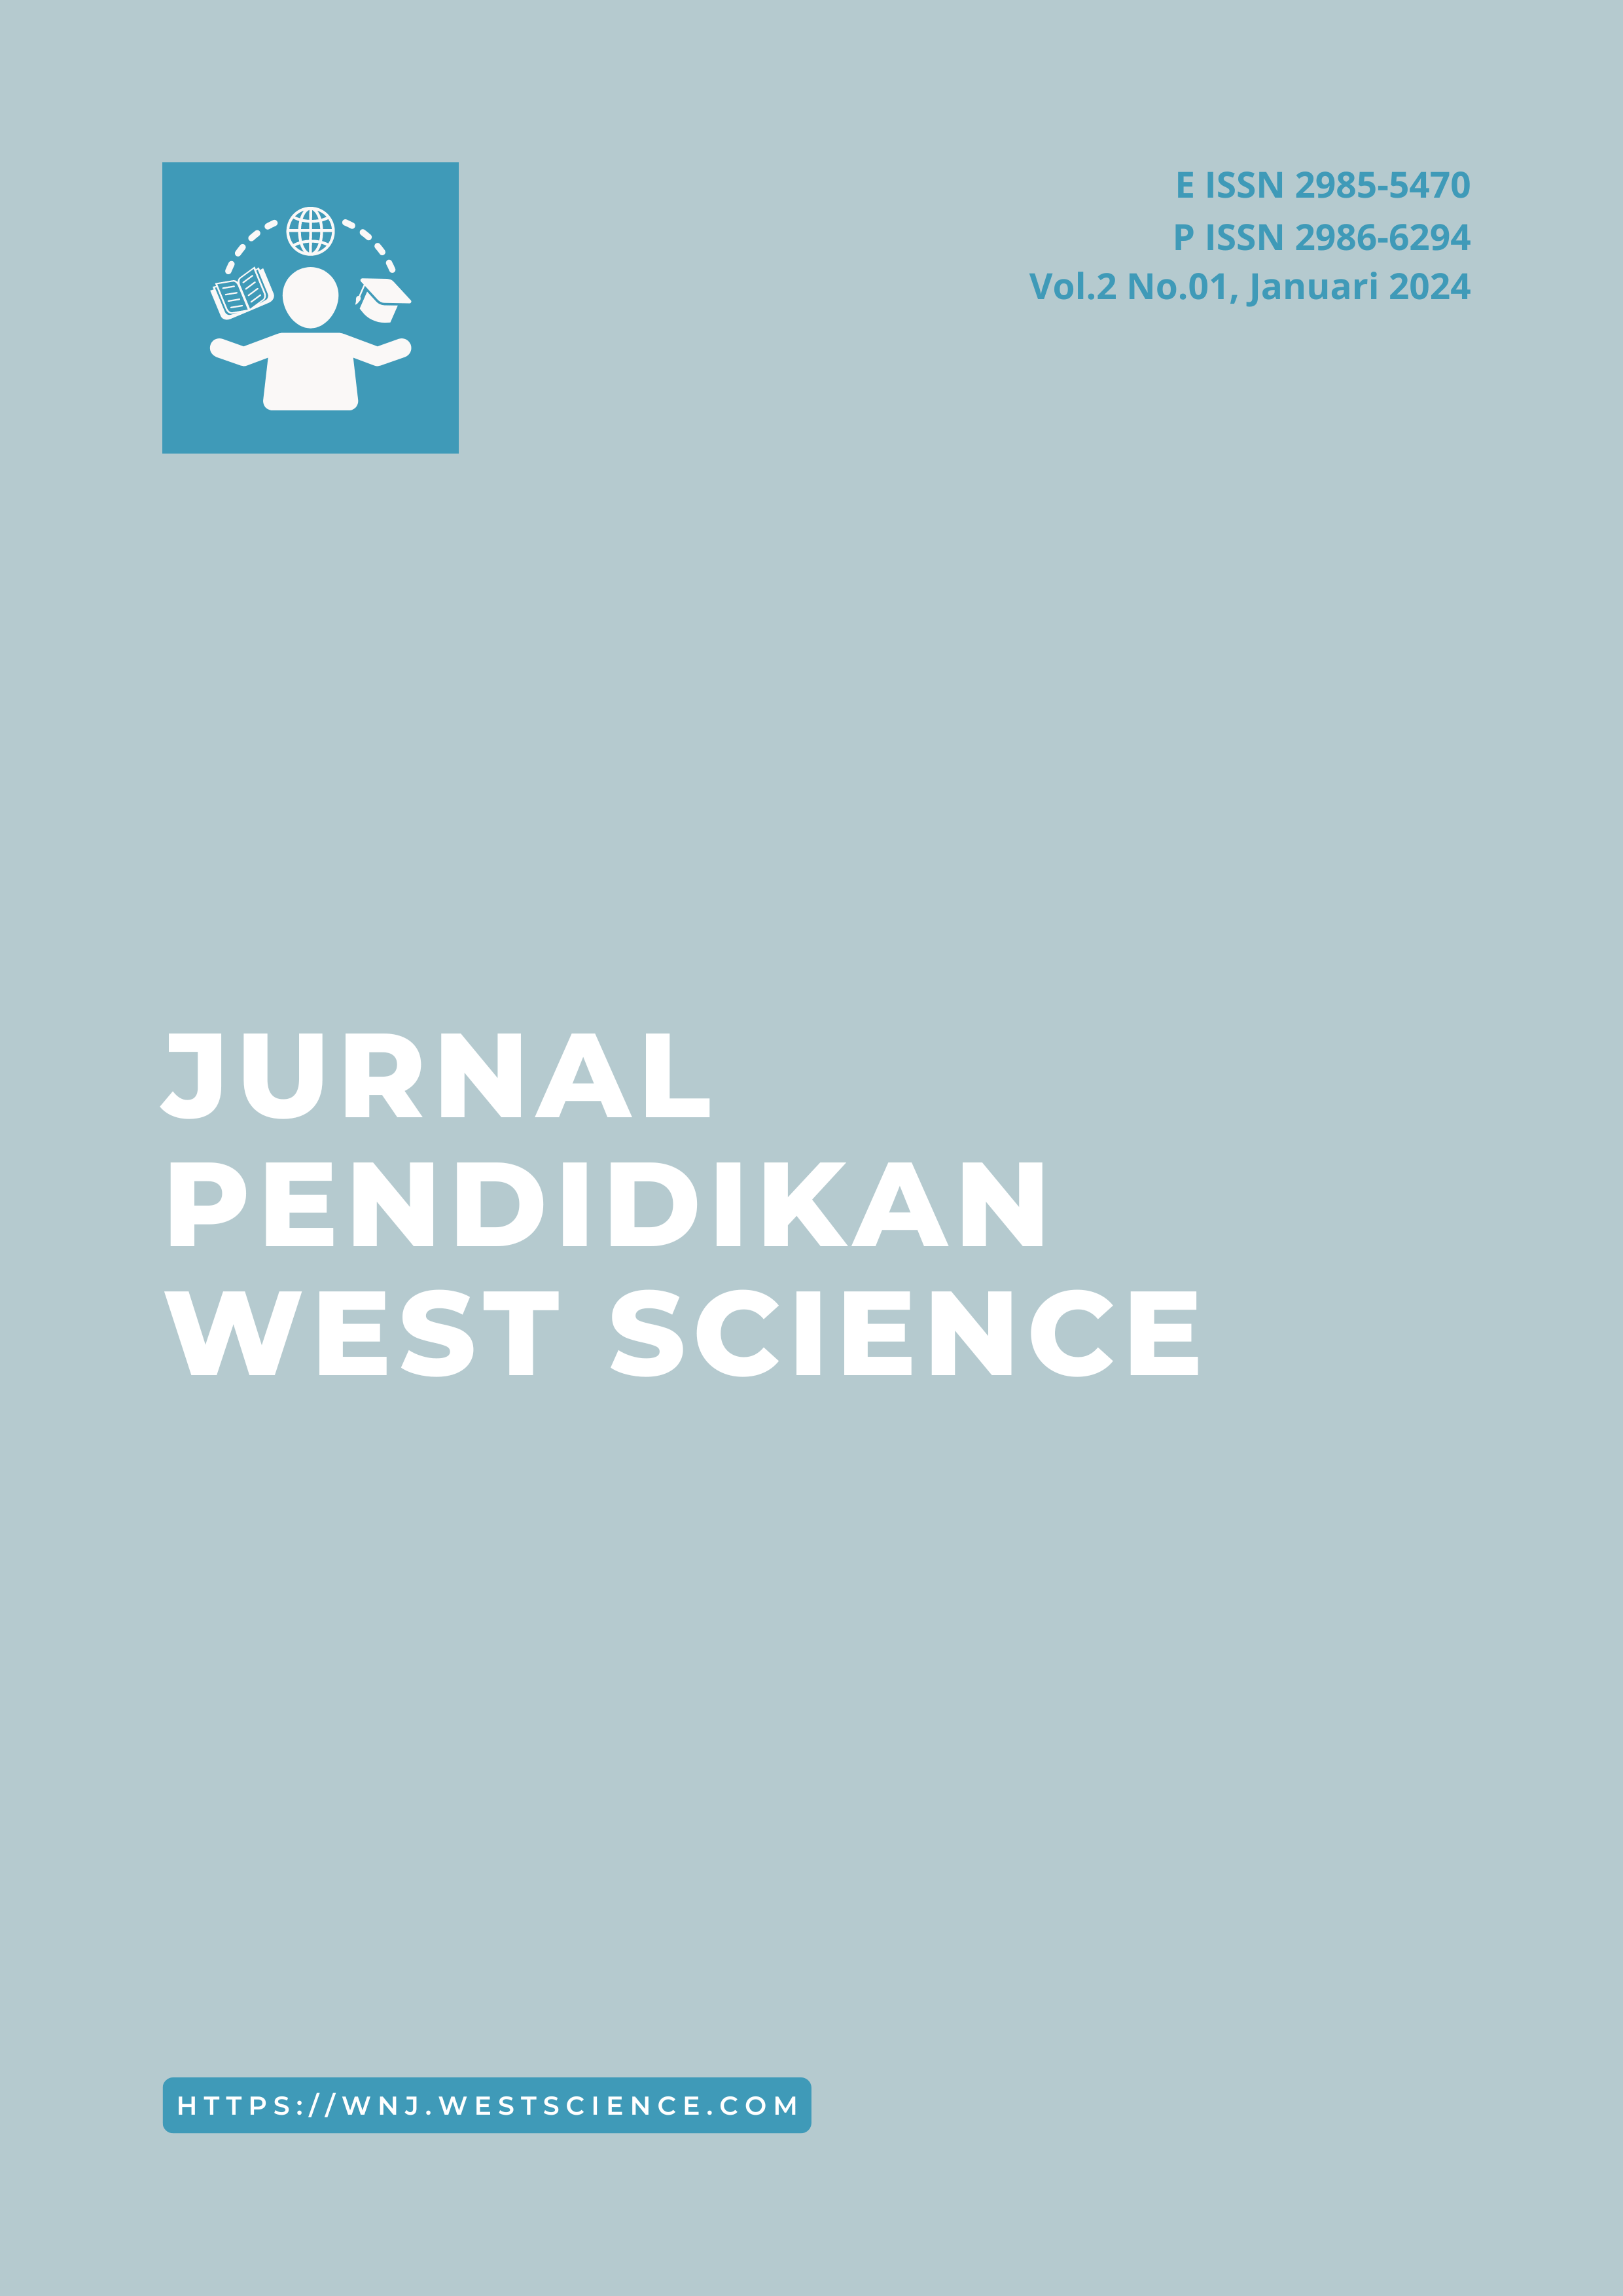 					Lihat Vol 2 No 01 (2024): Jurnal Pendidikan West Science
				